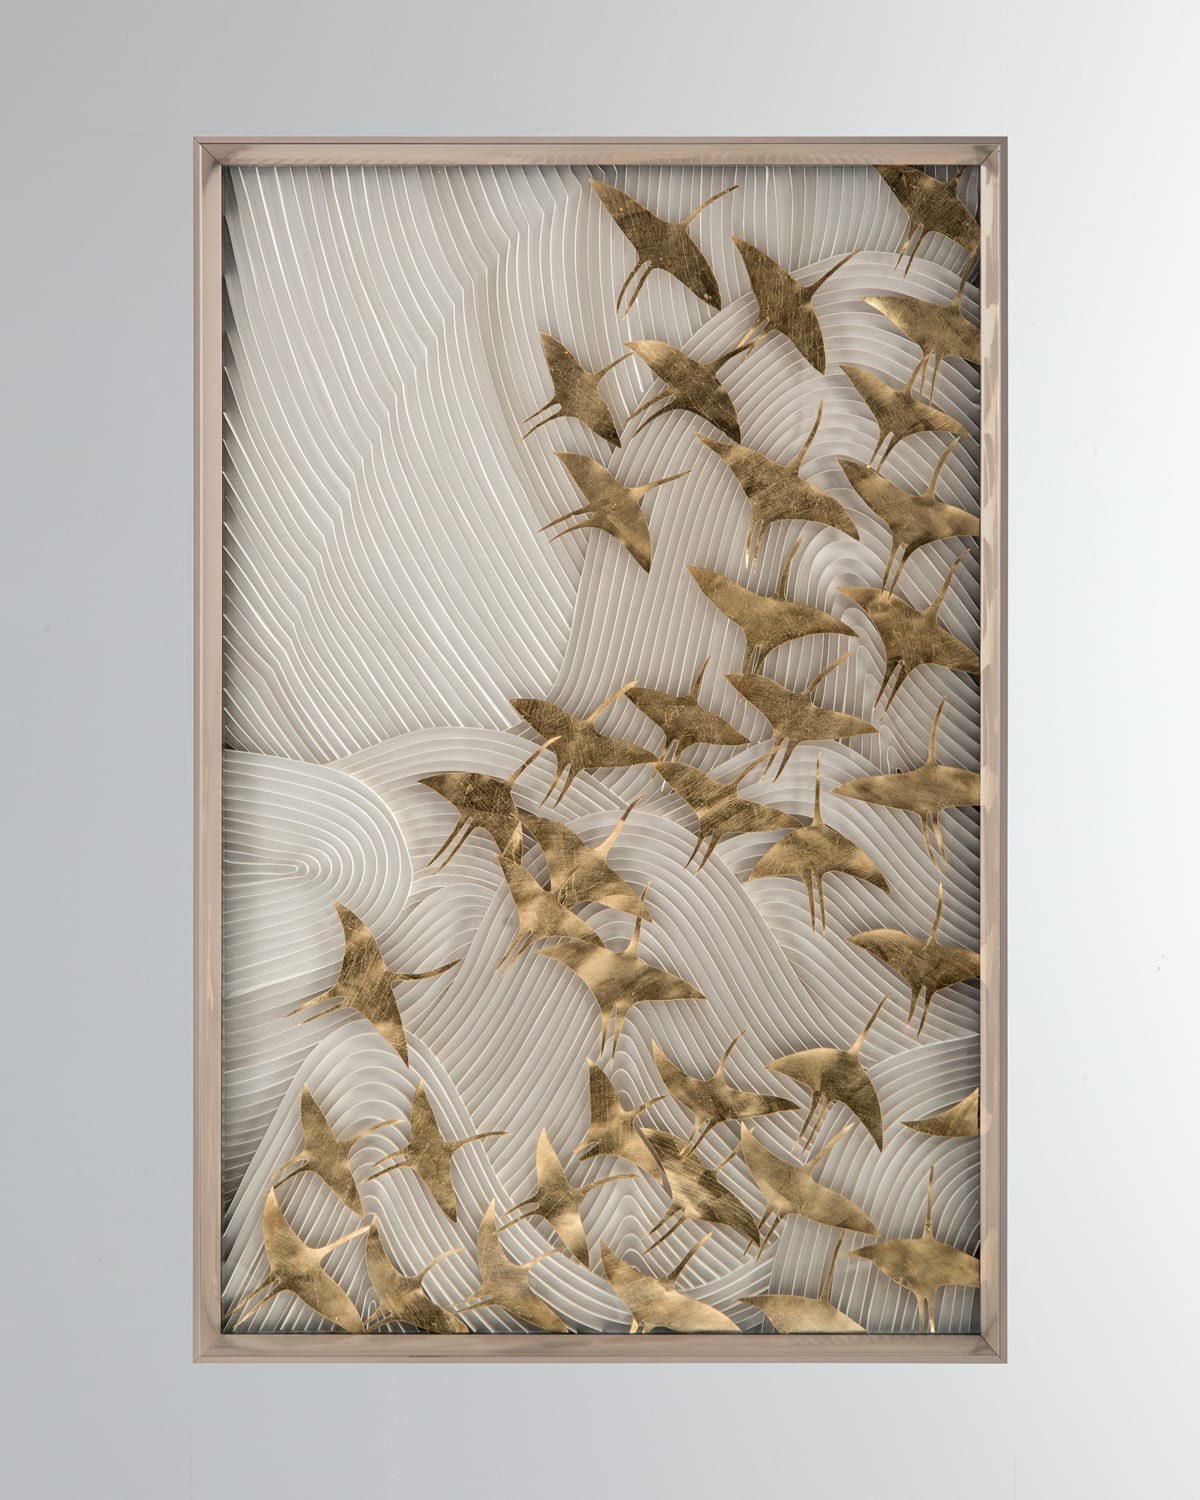 John-richard Collection Robat's "birds In Flight" Wall Art In Gold